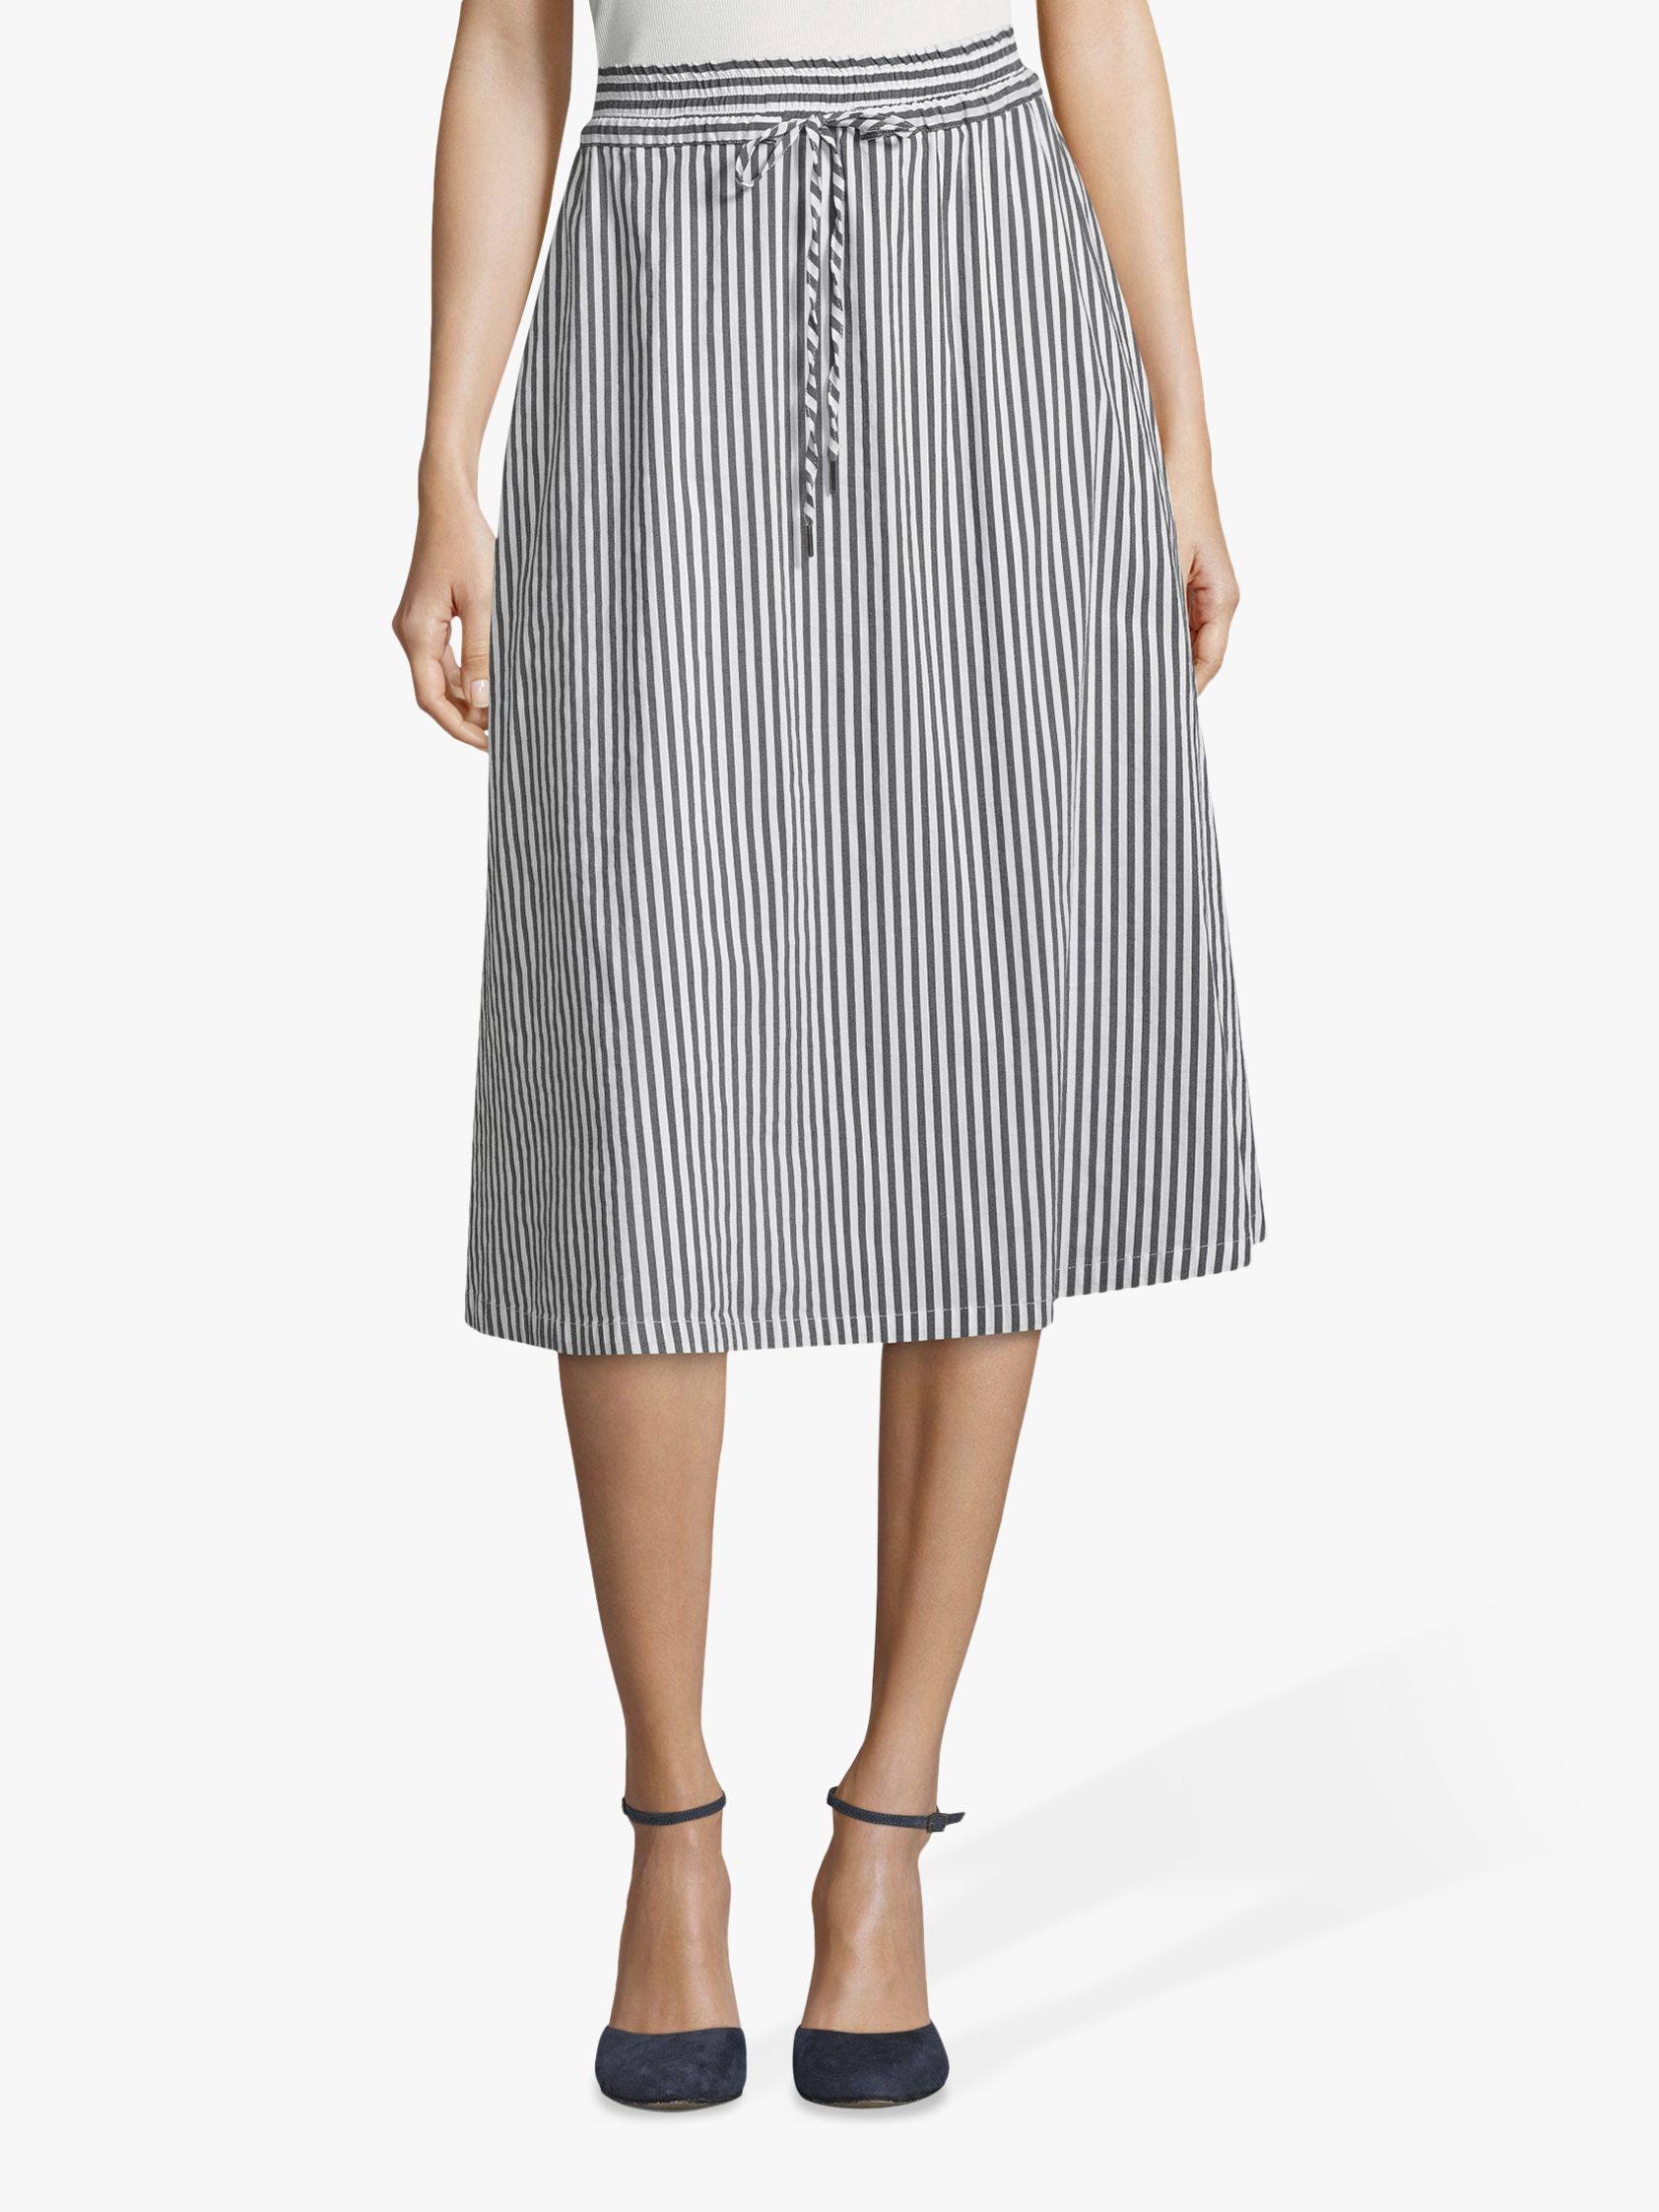 Betty & Co. Striped Cotton Blend Midi Skirt, Blue/White